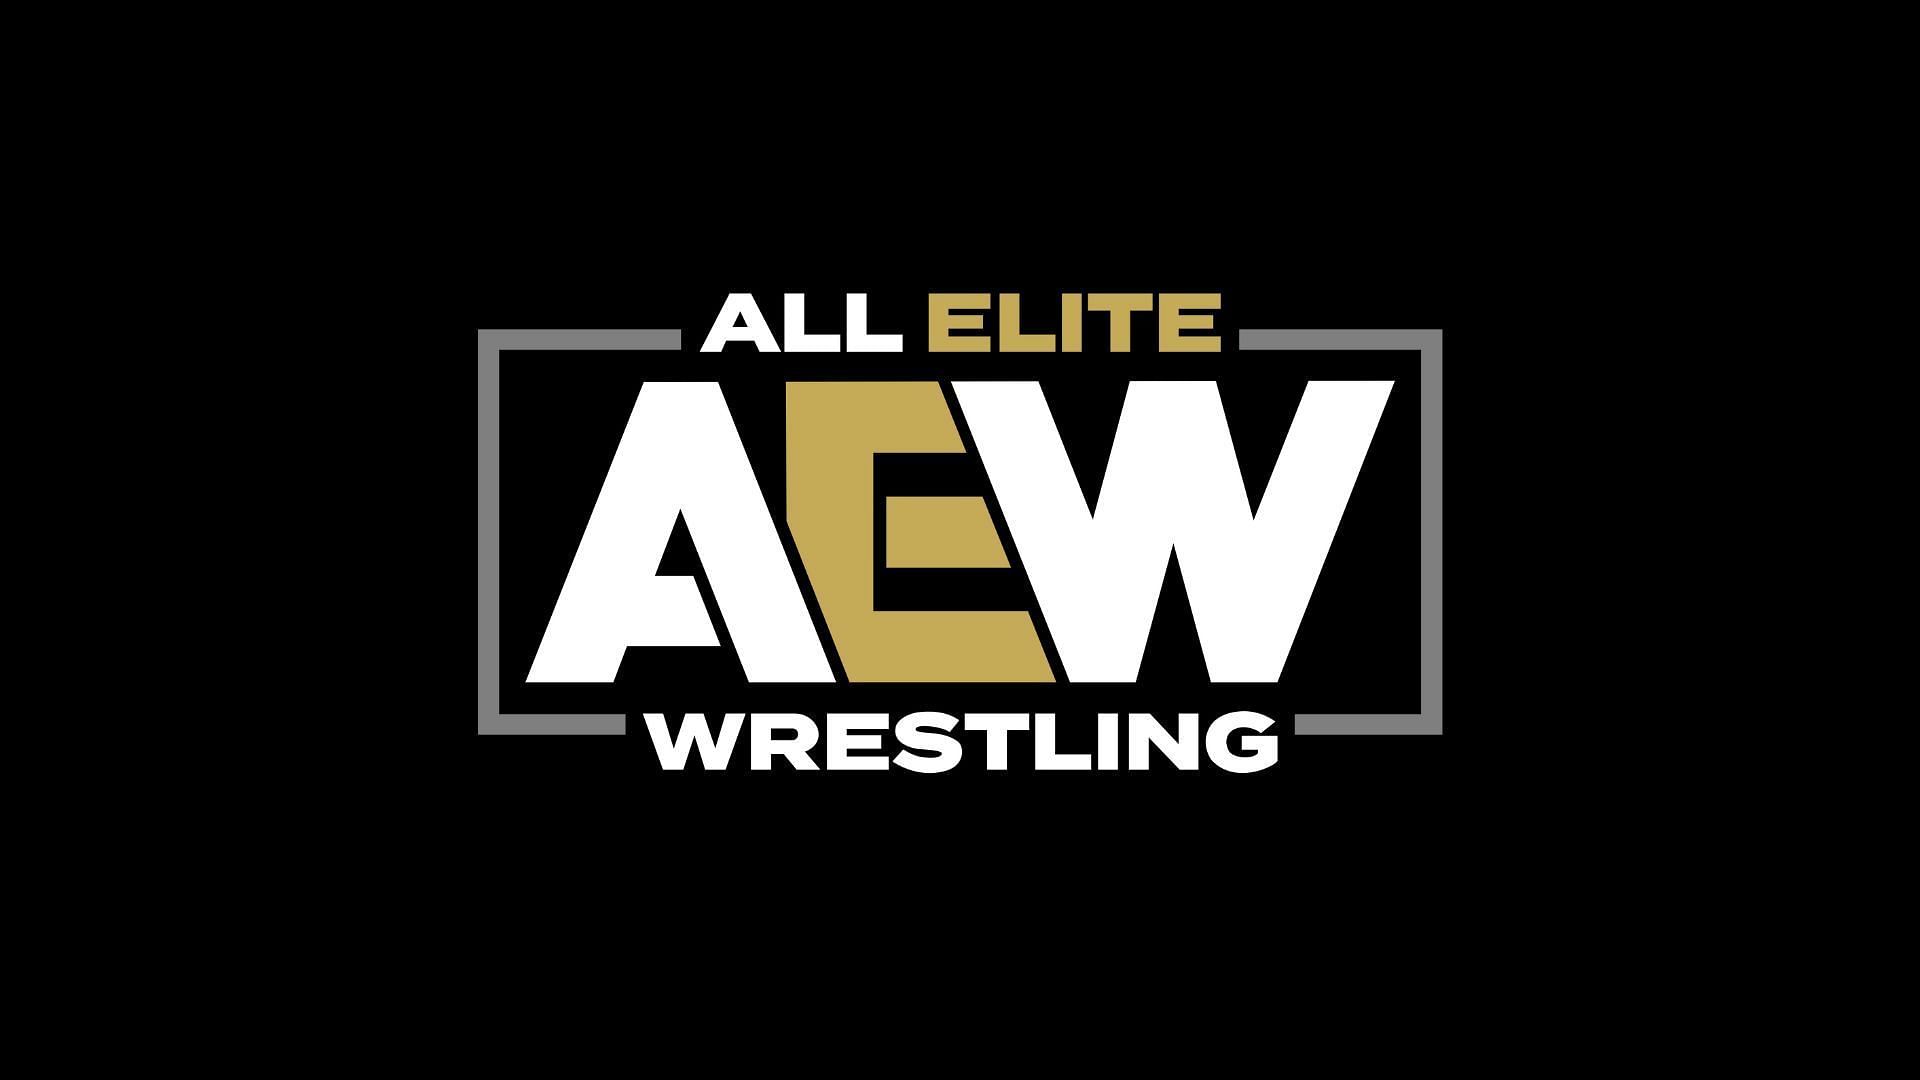 All Elite Wrestling (AEW) was established in 2019.